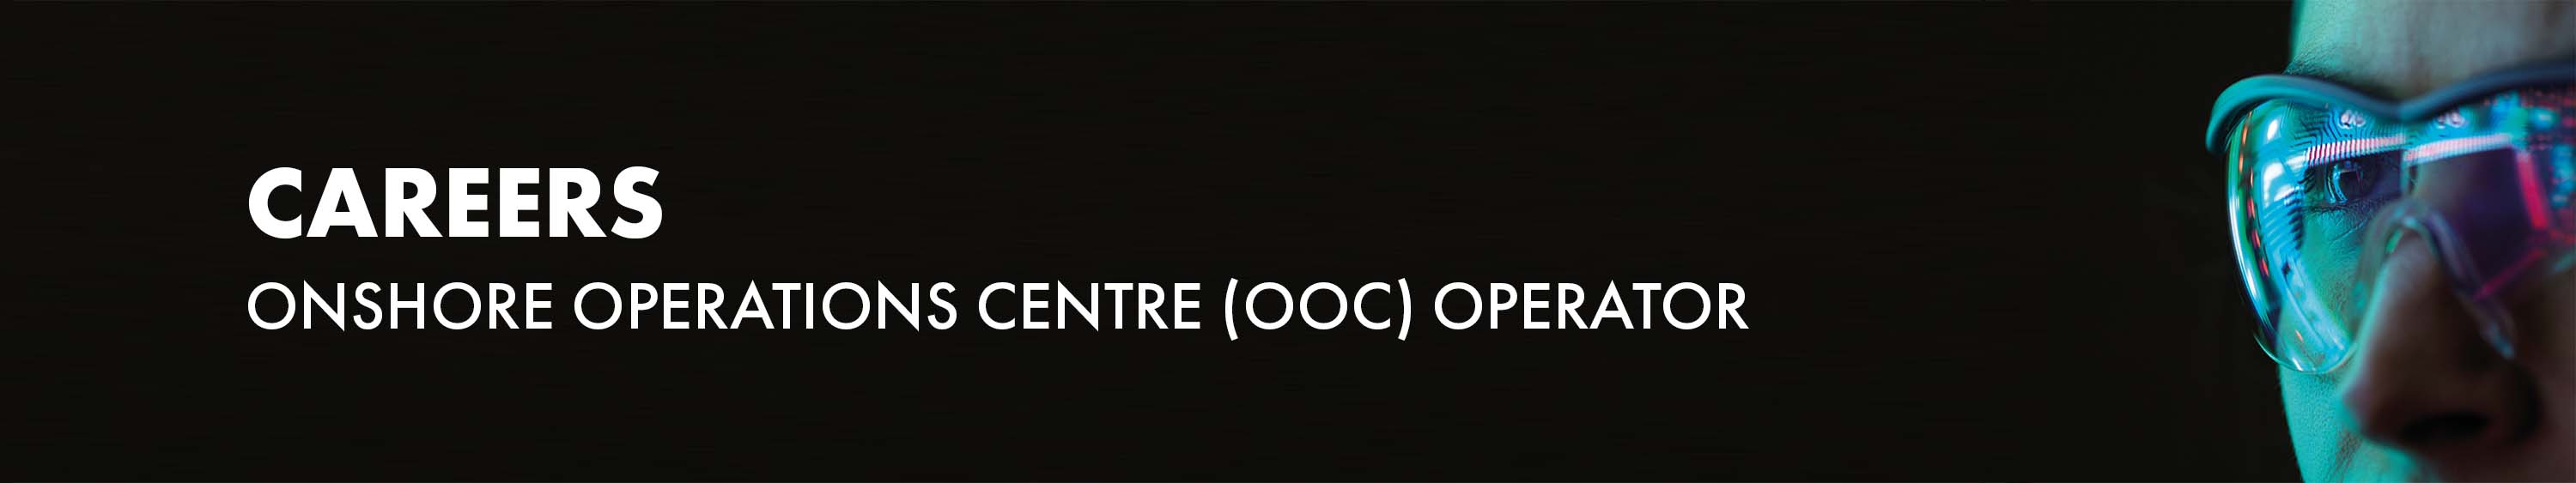 OOC Recruitment Banner 4